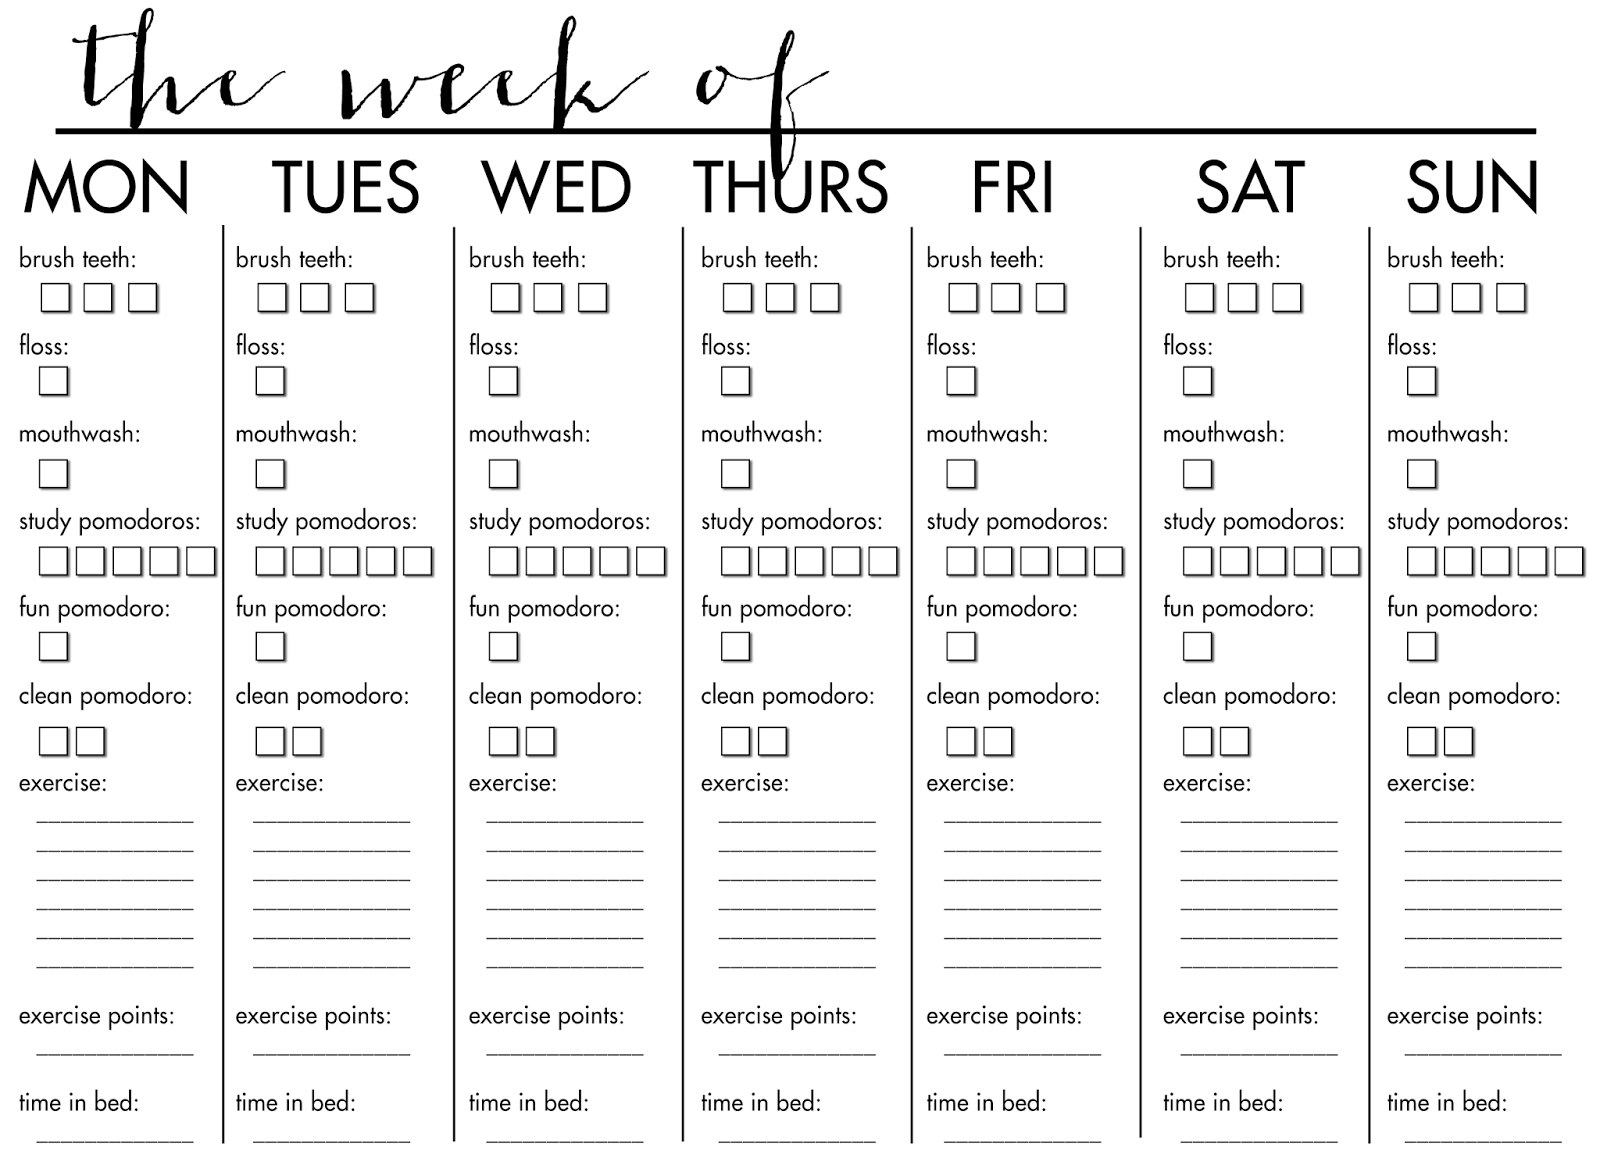 Printable Workout Calendar | Workout Calendar Printable